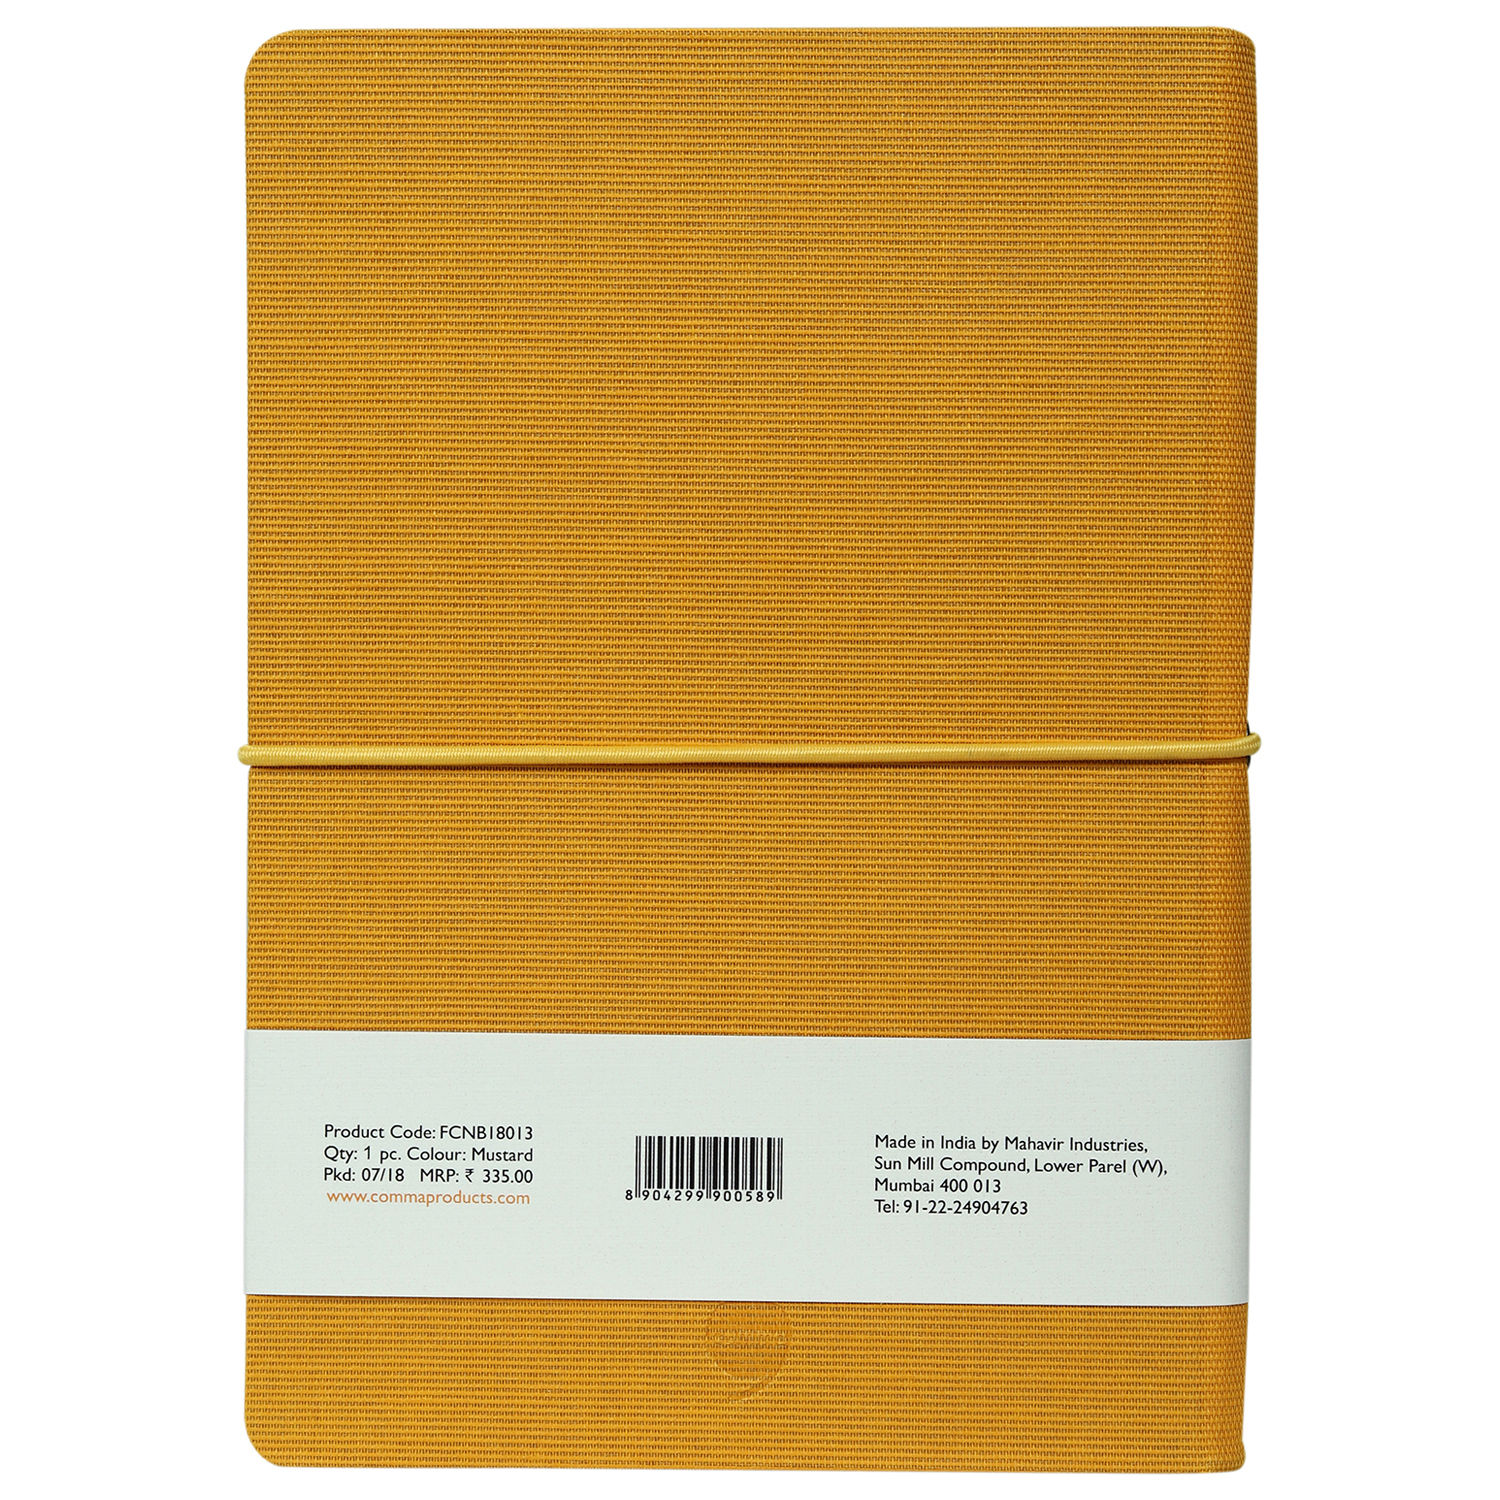 Comma Regina - A5 Size - Hard Bound Notebook (Mustard Yellow)